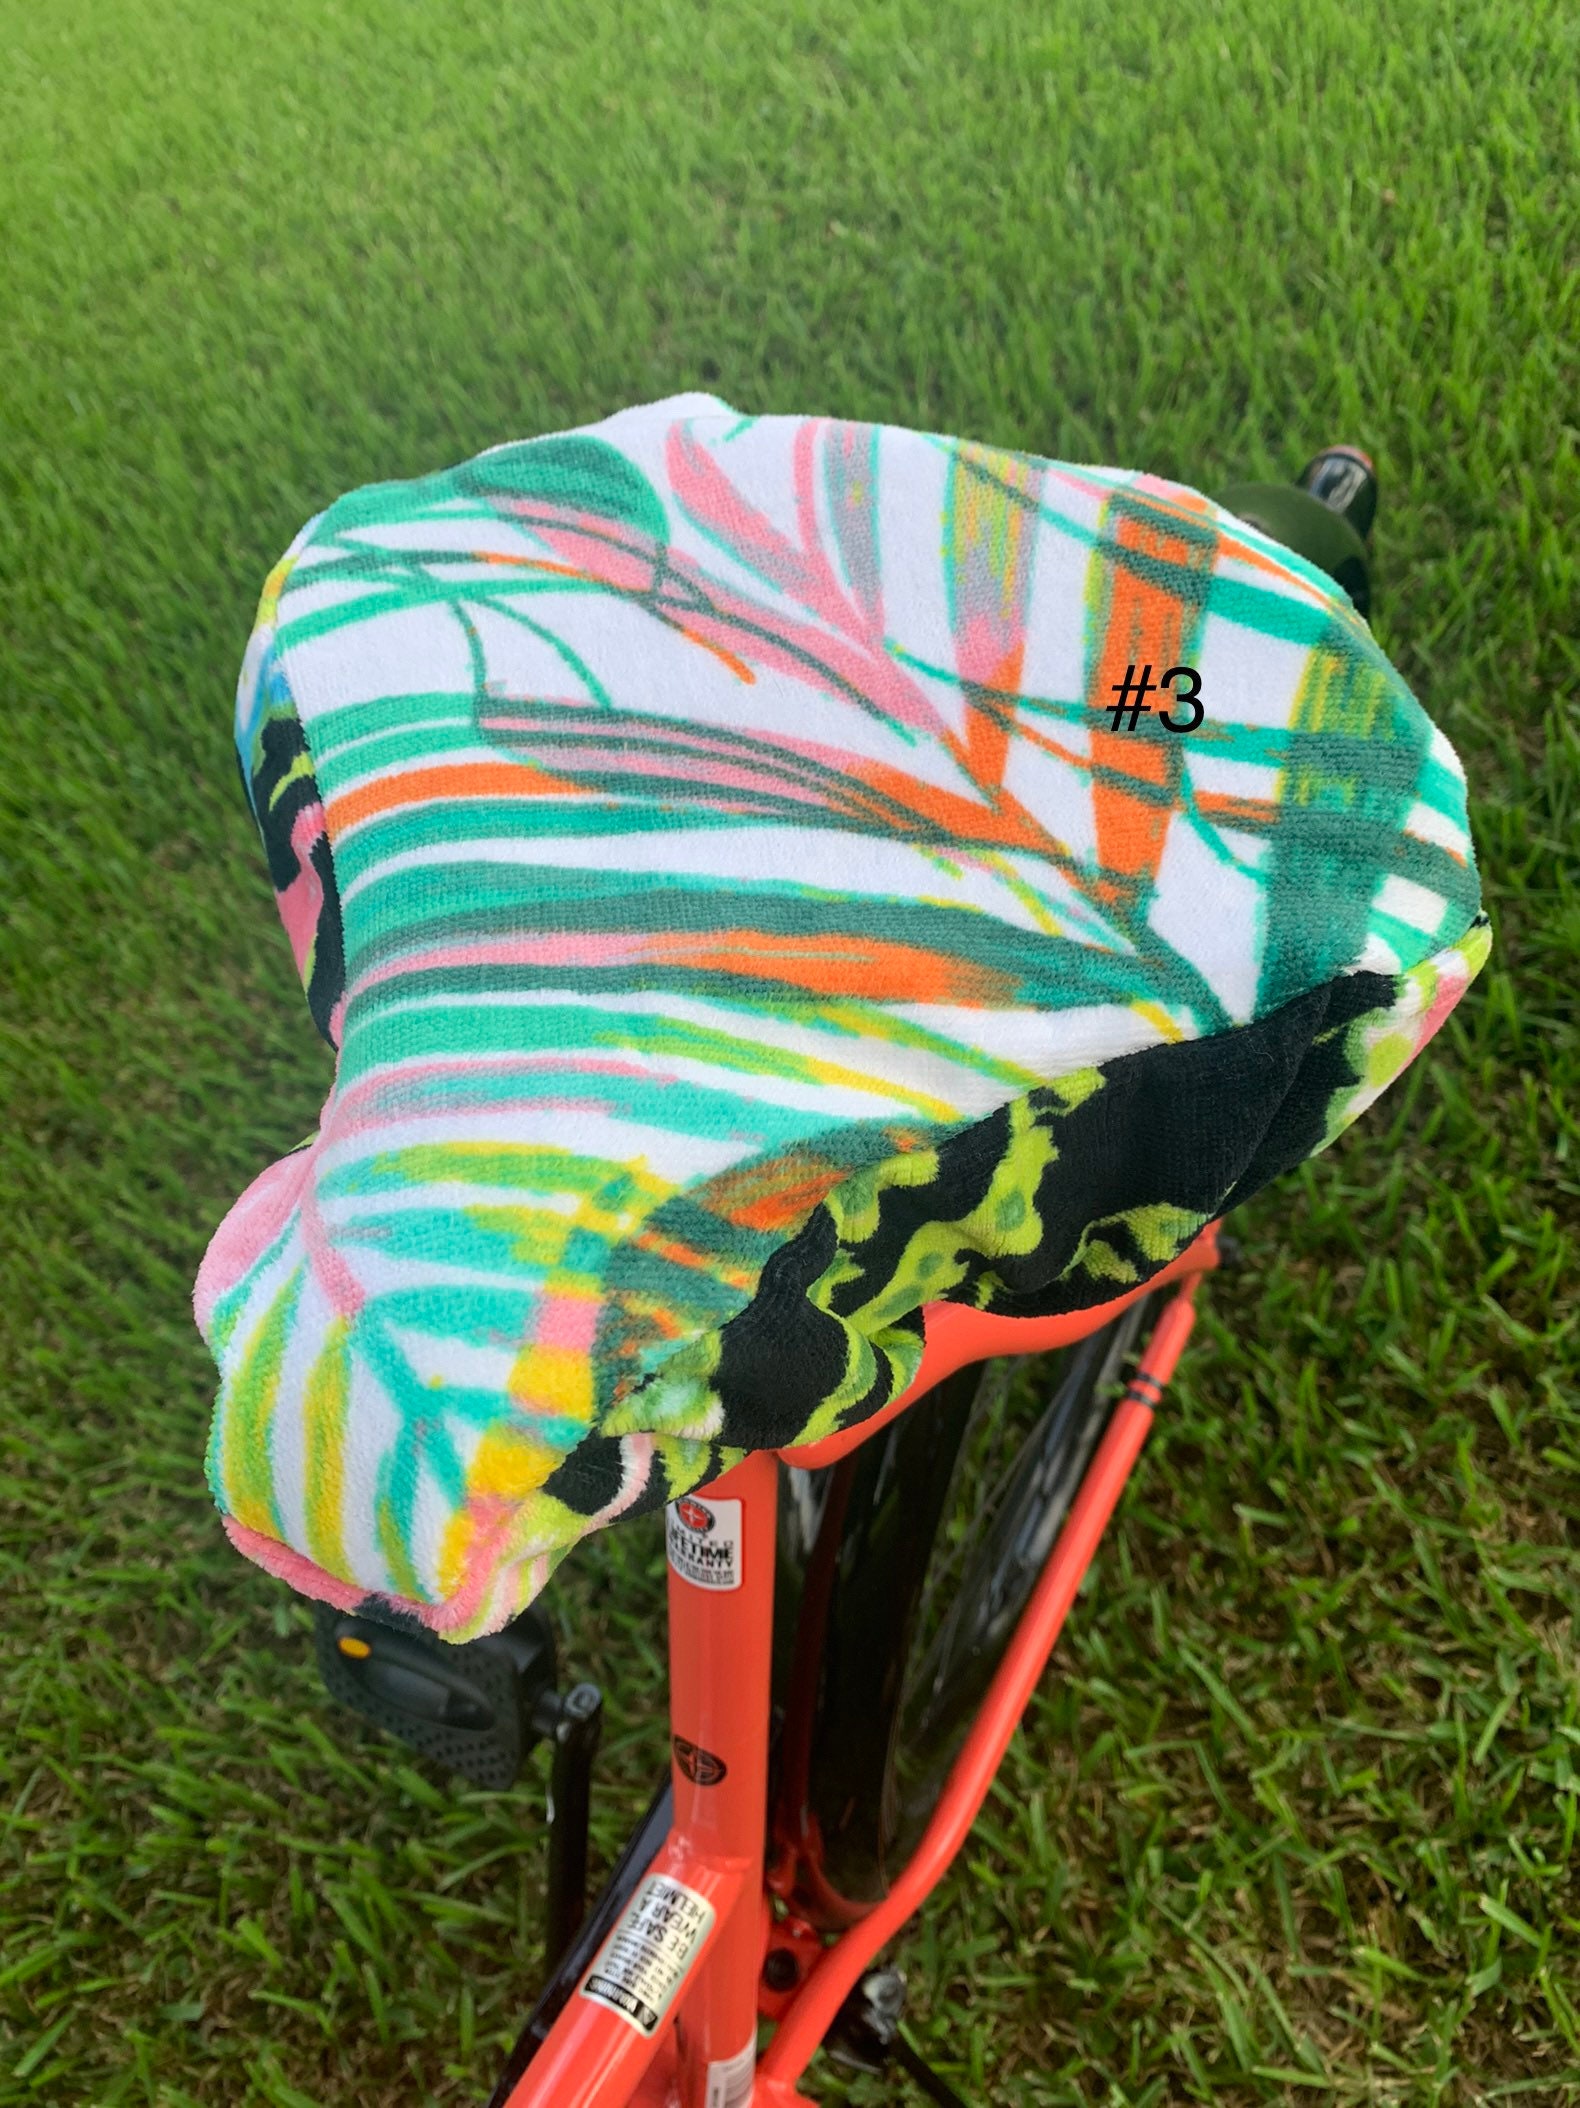 Splatter Beach Cruiser Bicycle Seat Cover zhoosh your ride